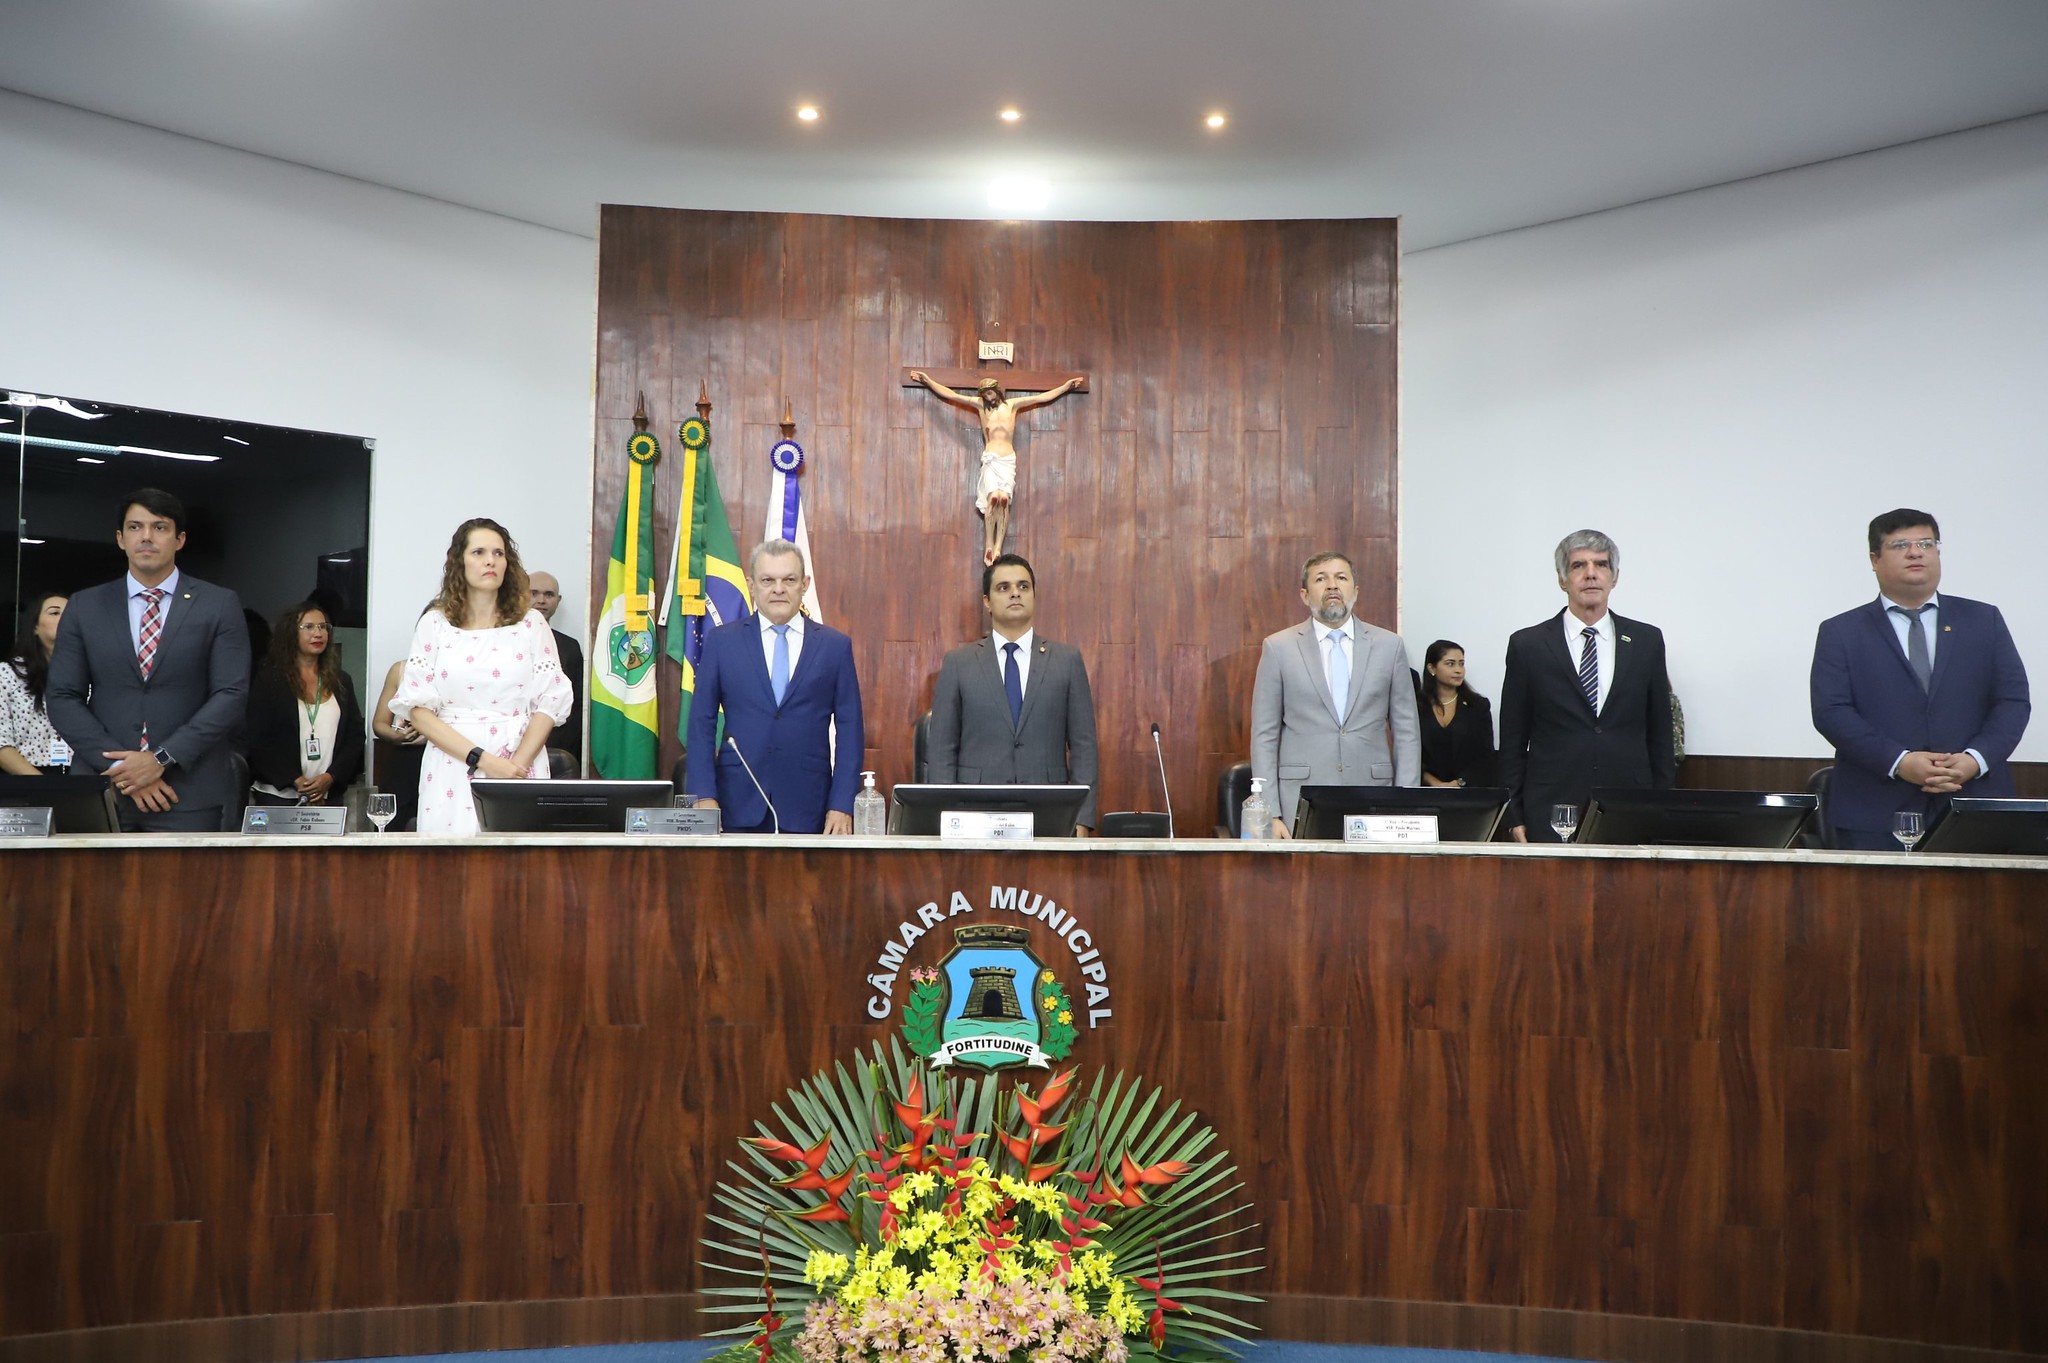 Defensoria participa da abertura do Primeiro Período Legislativo da Câmara dos Vereadores de Fortaleza